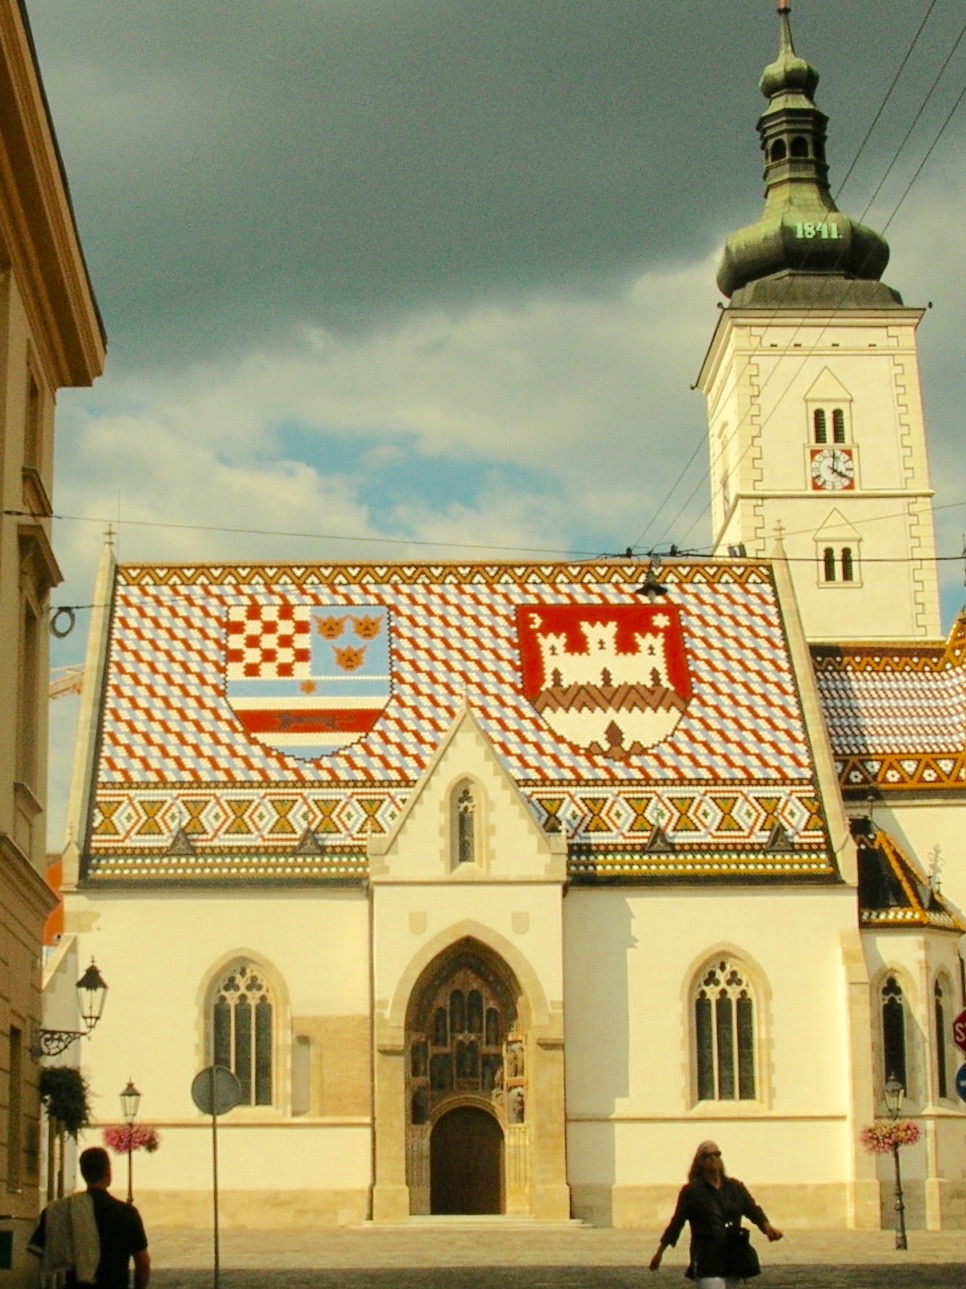 Crkva Svetog Marka (St. Mark’s Church) - bright, multicolored tiles depict the coats of arms of Zagreb, Croatia, Dalmatia and Slavonia. Photo by Marla Norman.